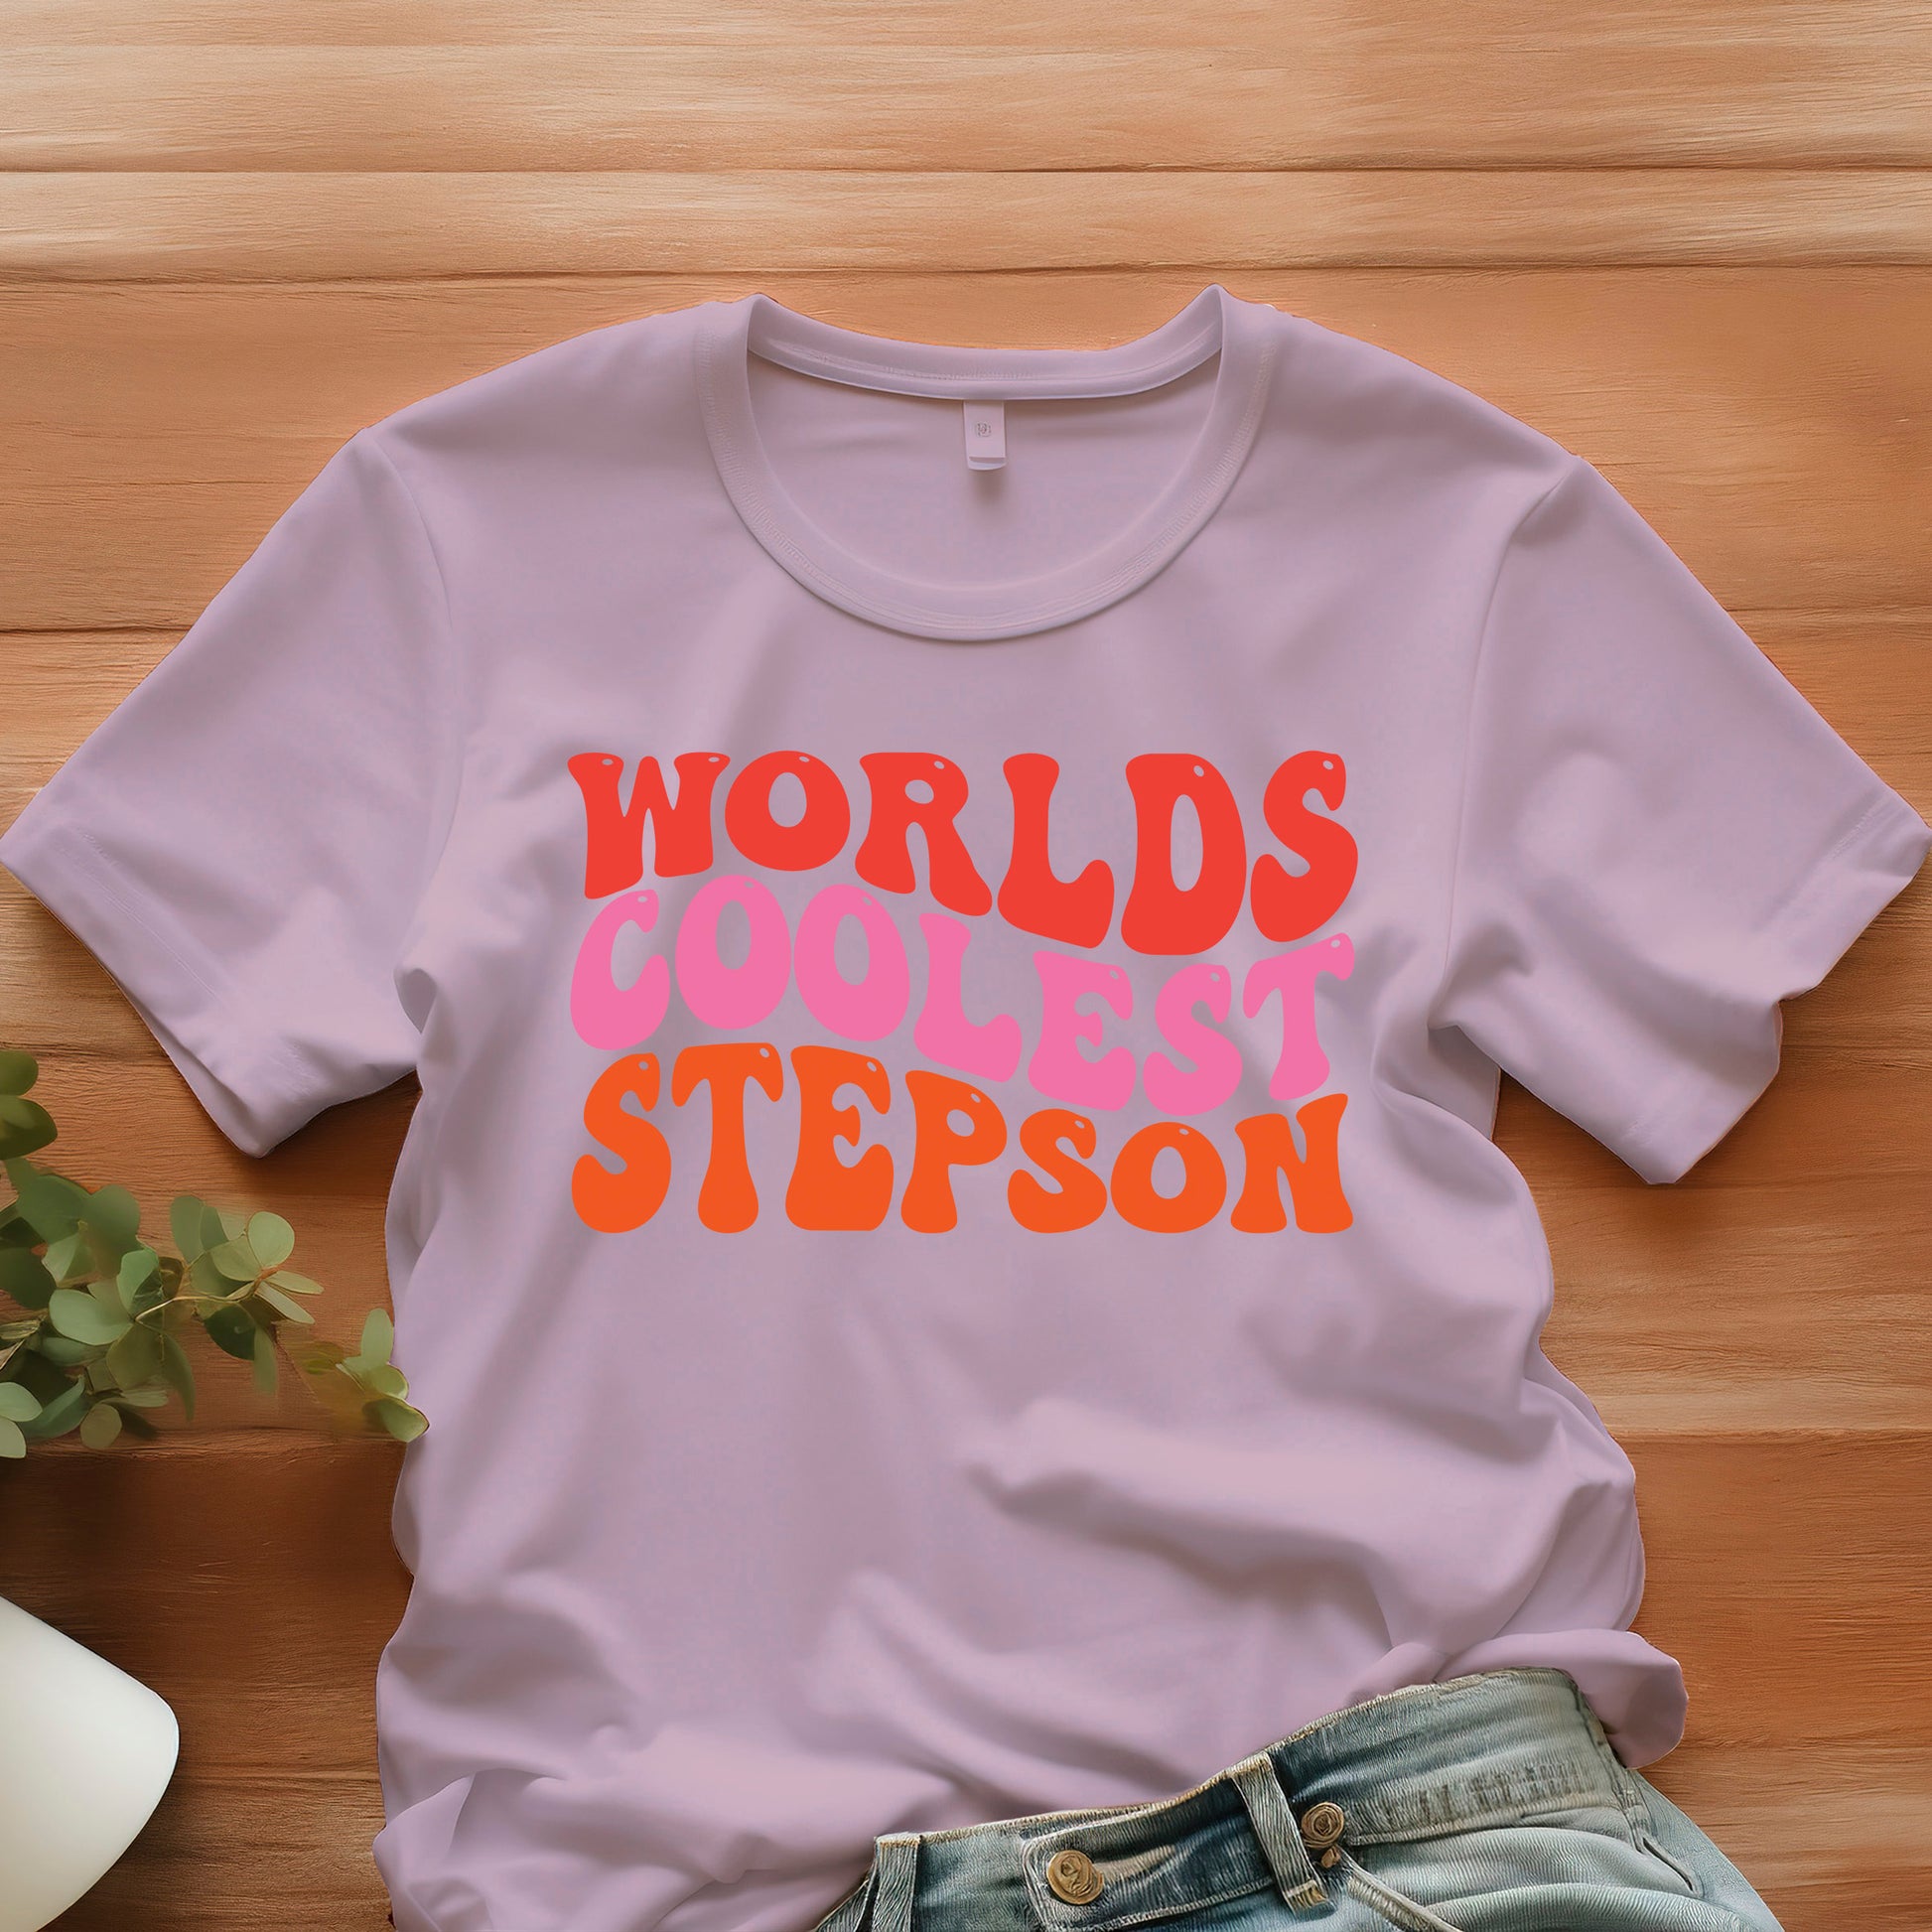 World's coolest stepson shirt